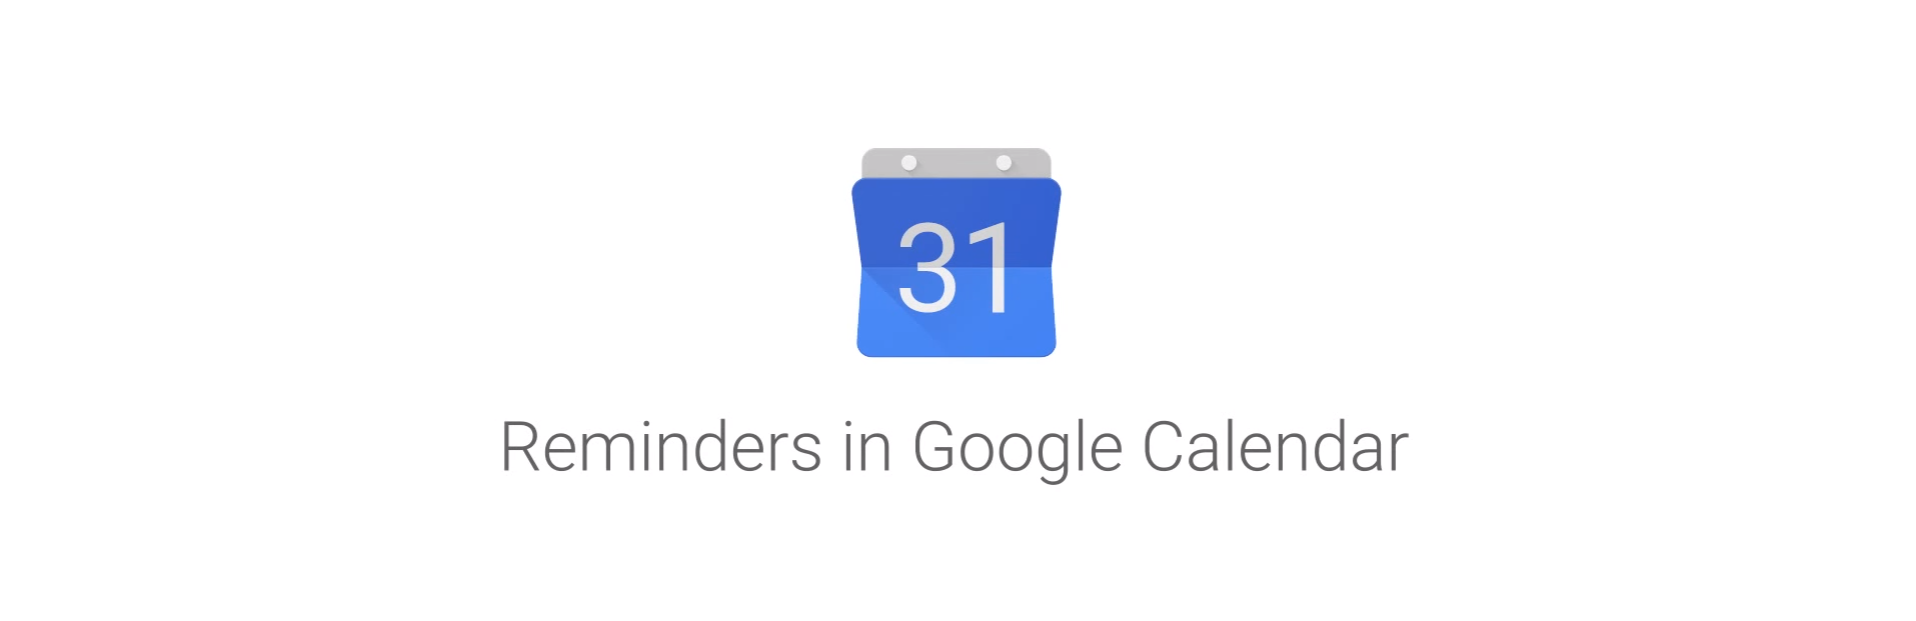 Reminders อุปกรณ์เตือนความจำบน Google Calendar มาบนเว็บไซต์แล้ว!!